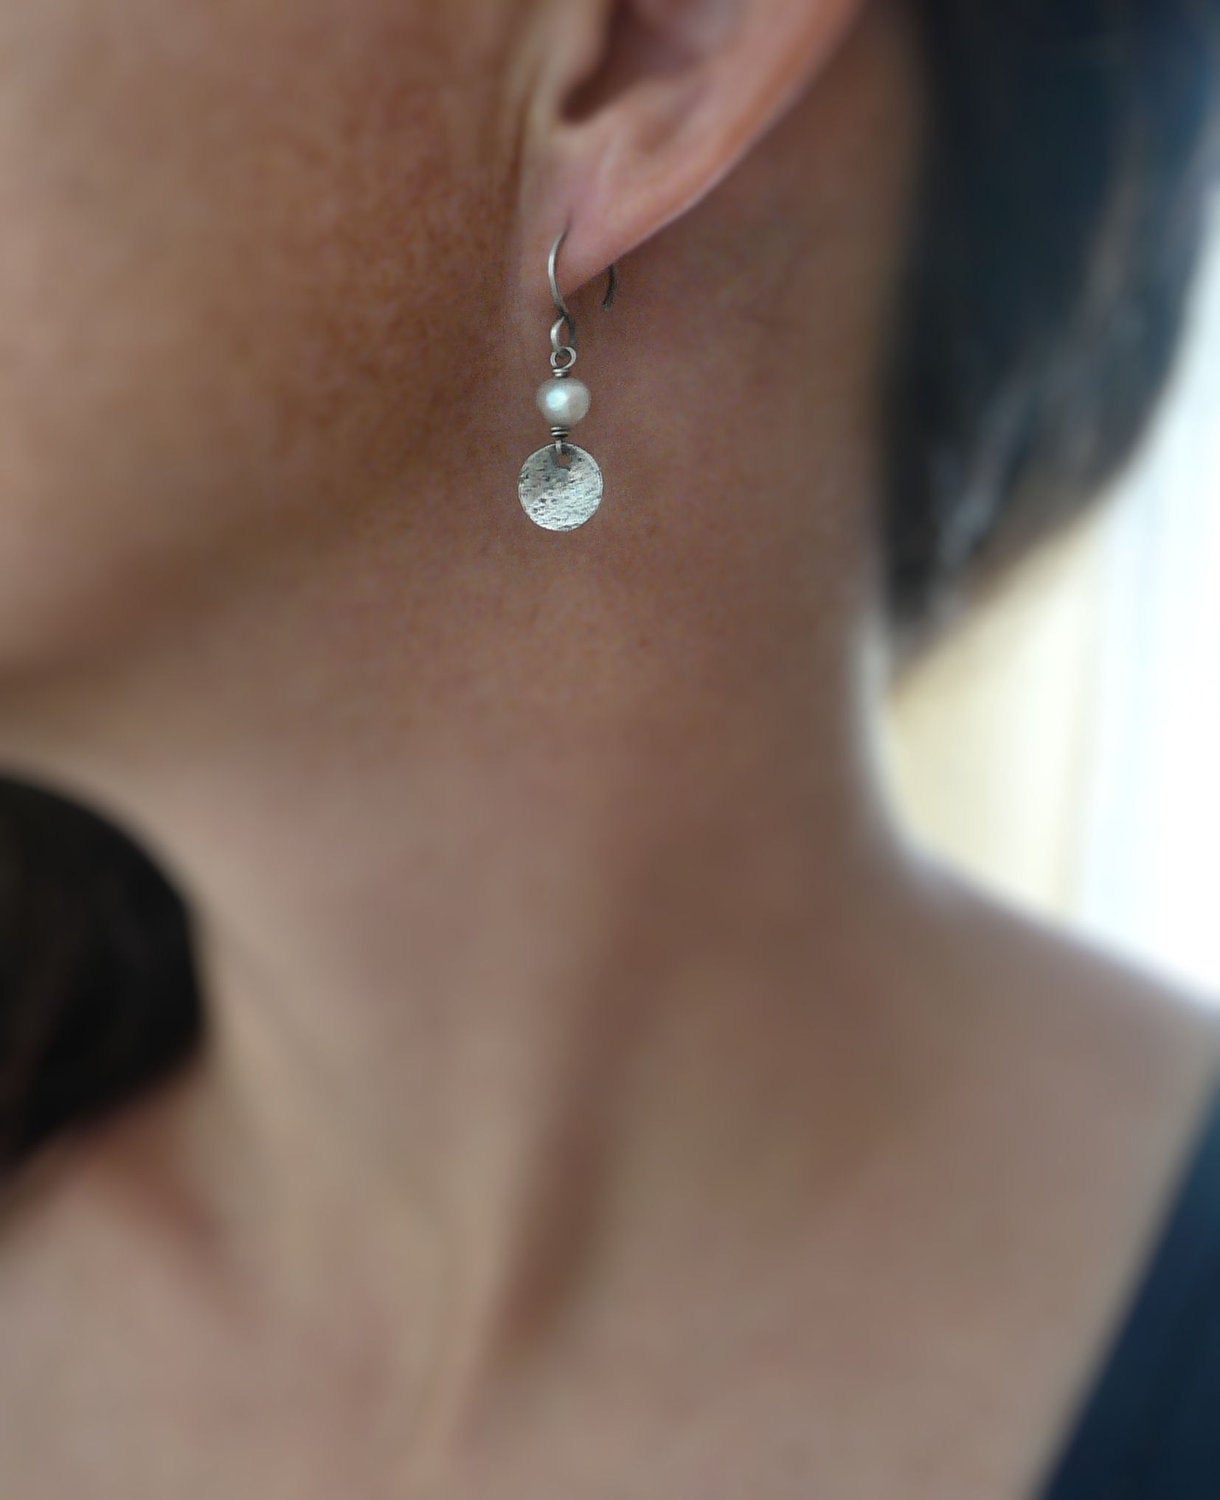 Overcast Earrings - Handmade. Freshwater Pearls. Oxidized, Textured Sterling Silver Dangle Earrings